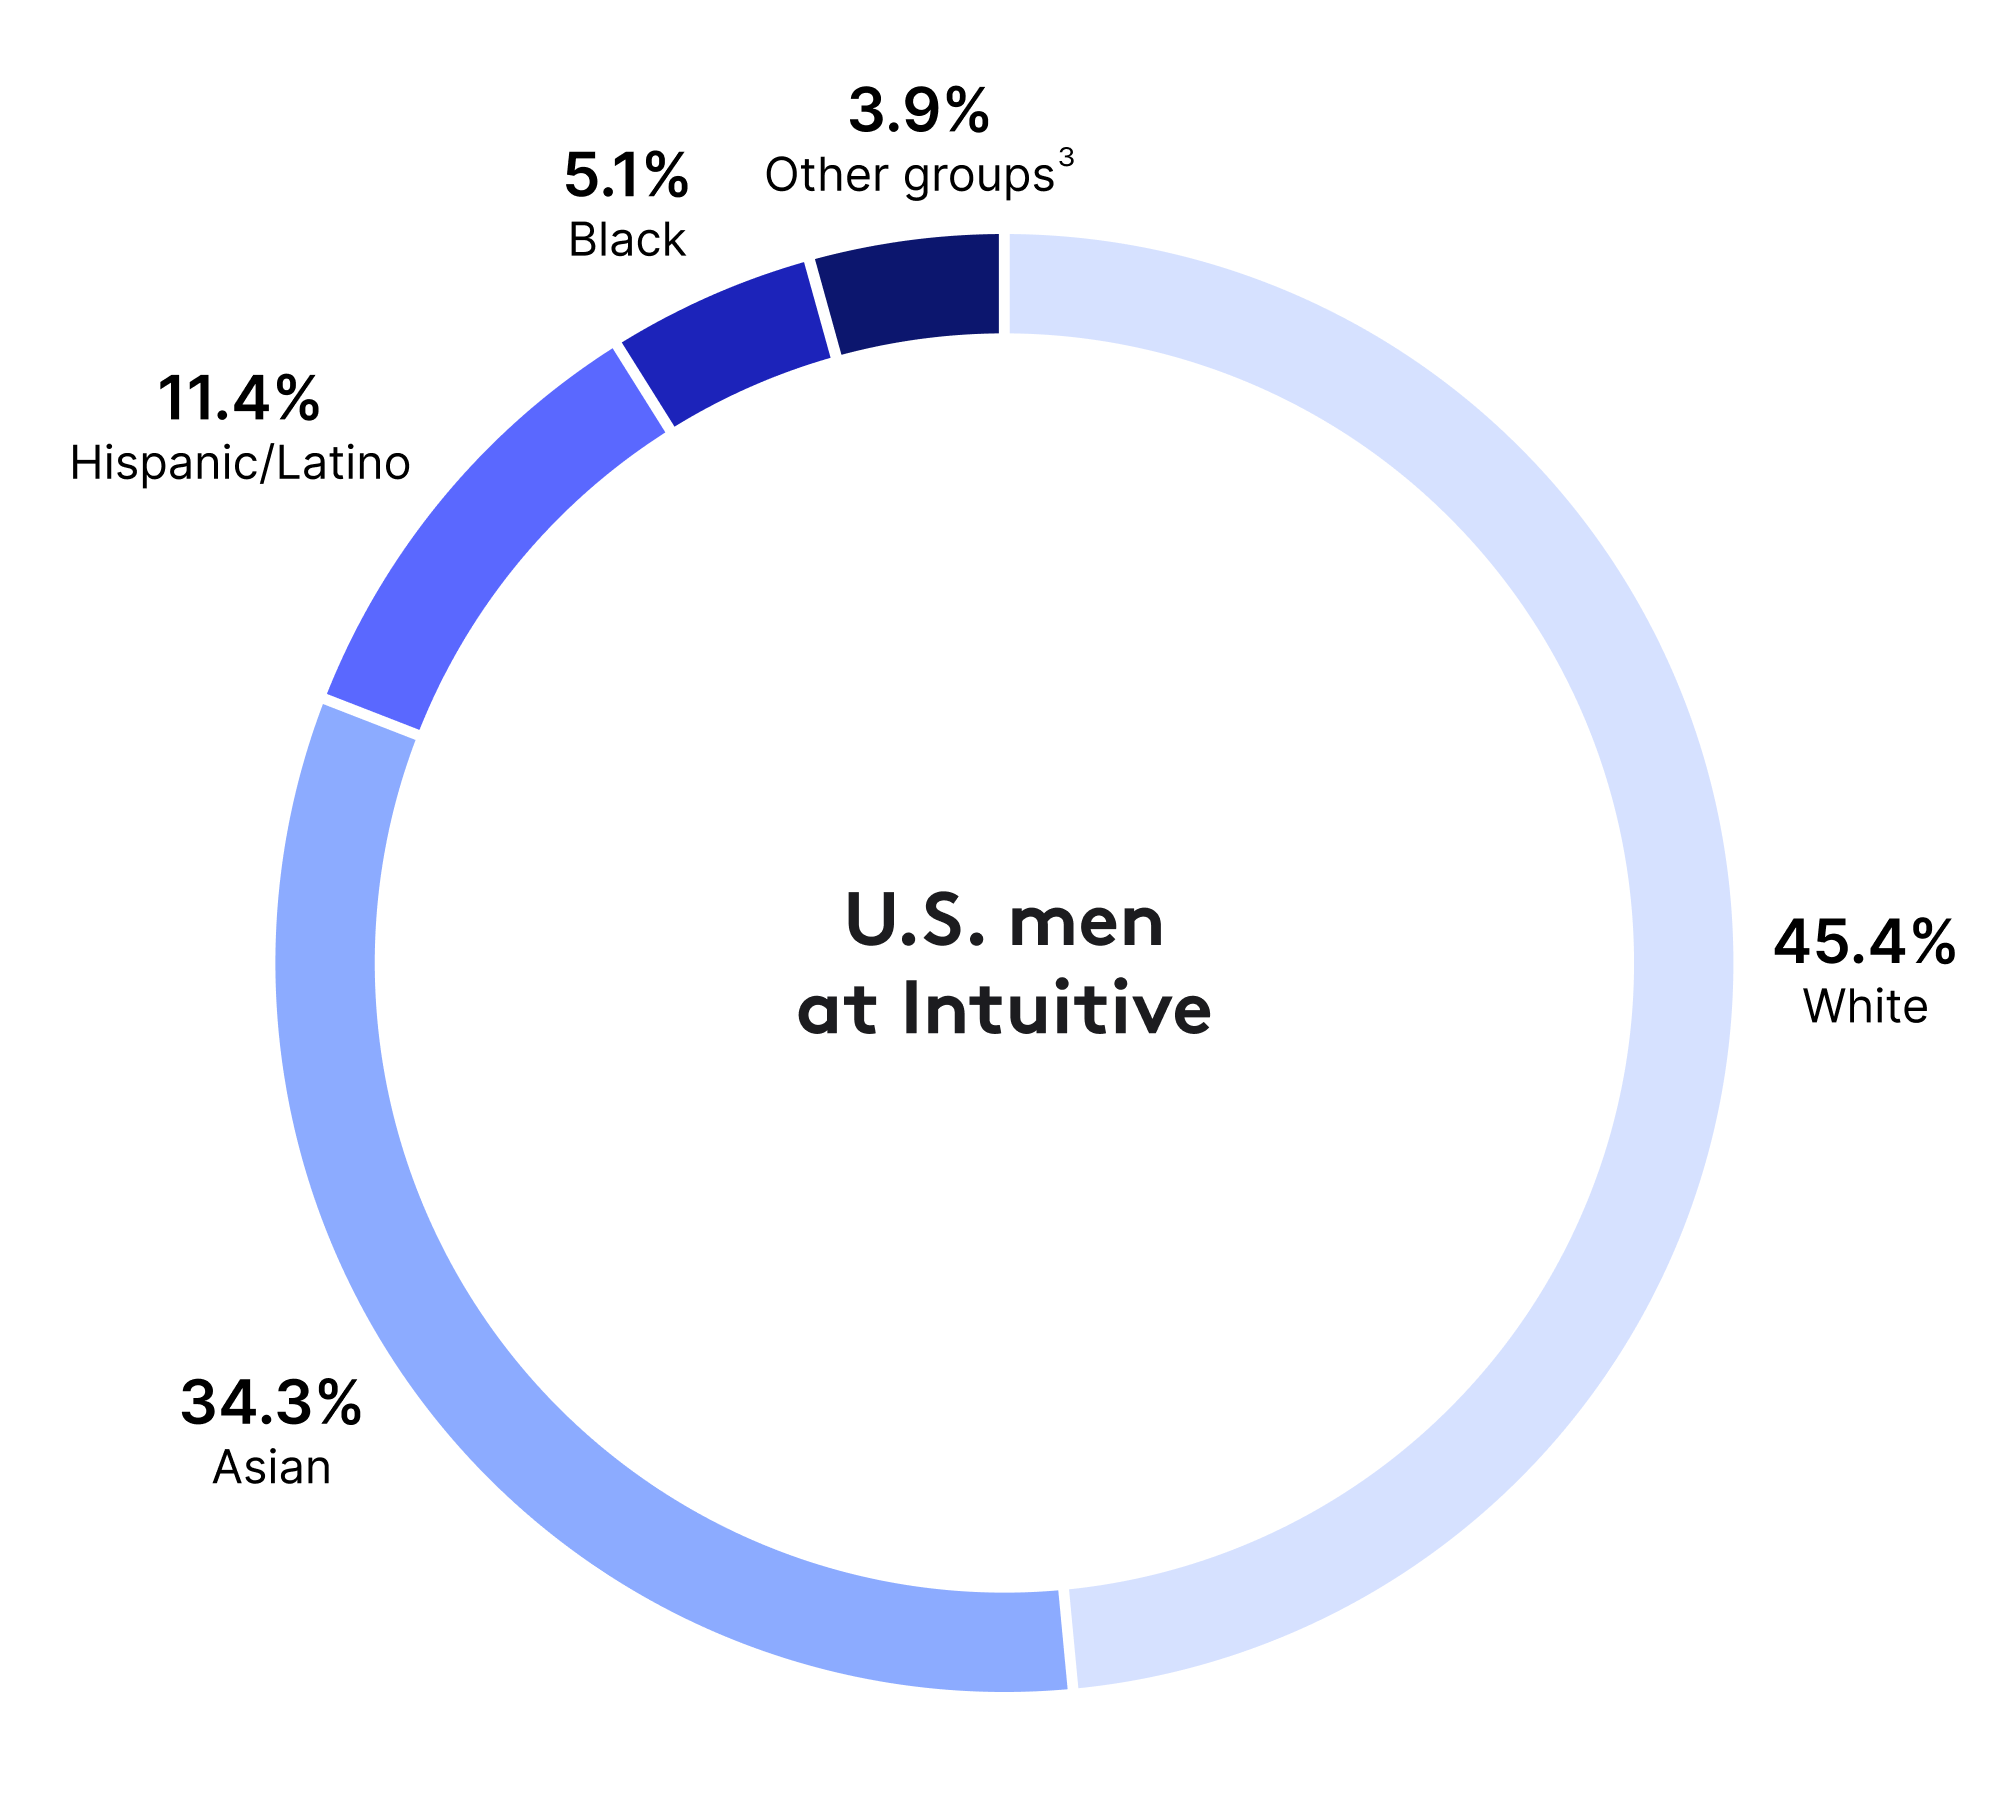 U.S. men representation by race/ethnicity percentages